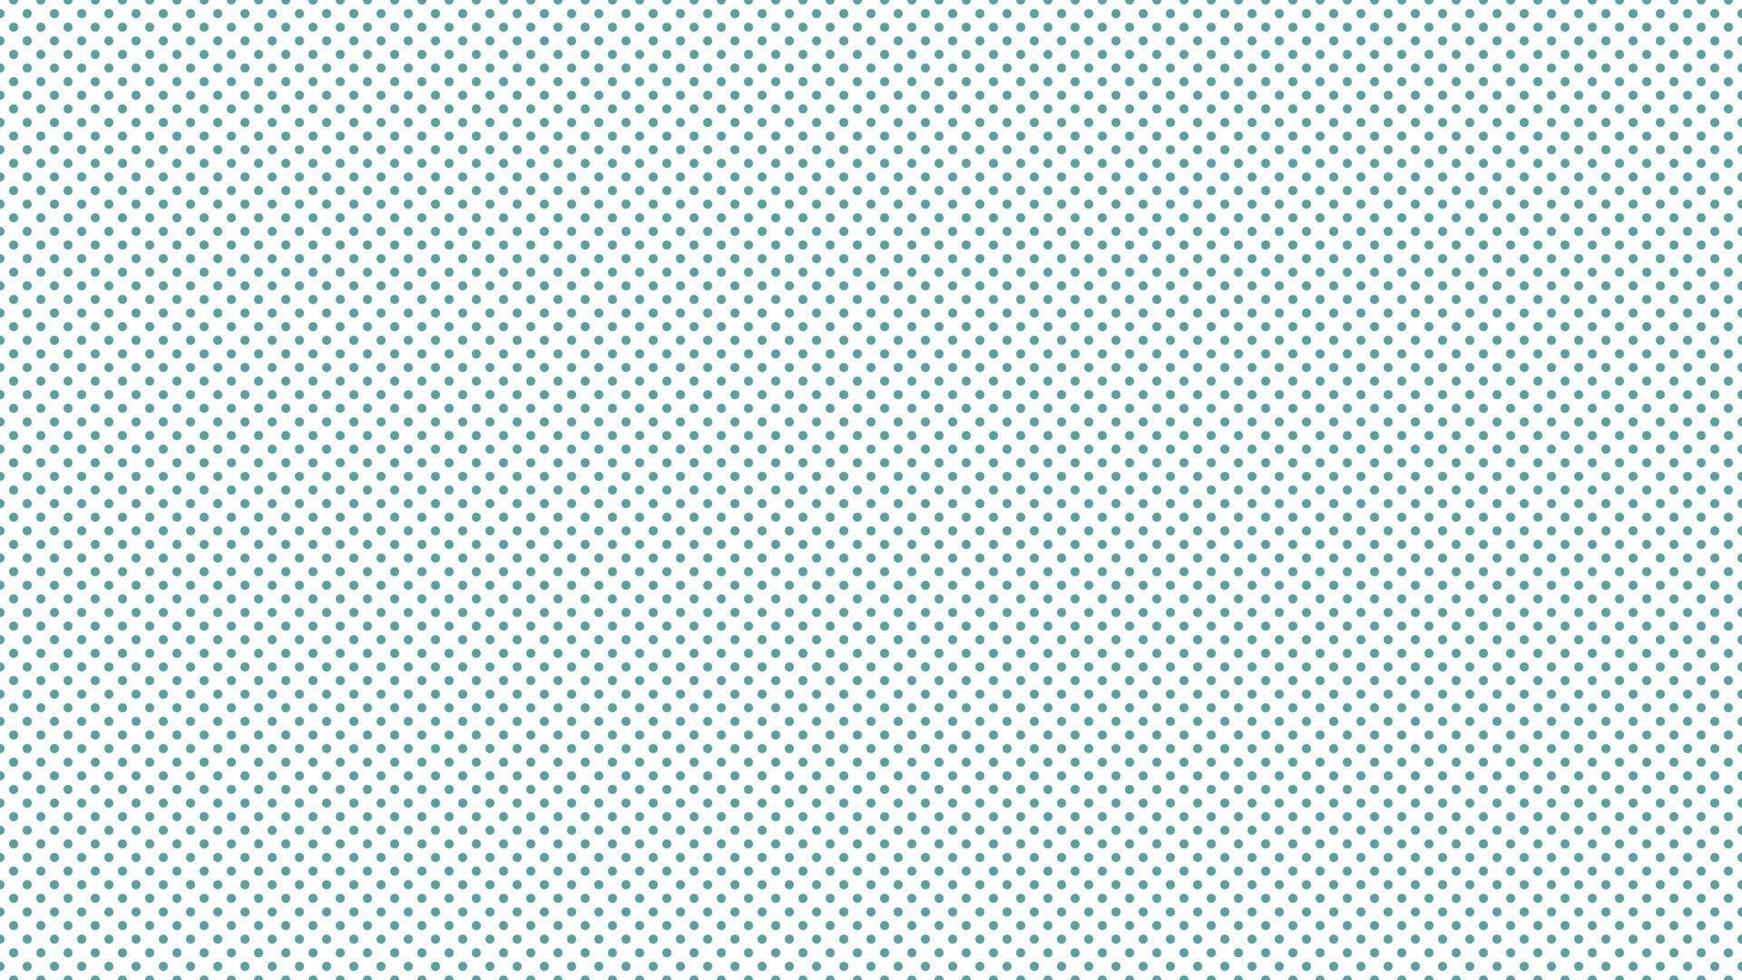 cadet blue cyan color polka dots background vector